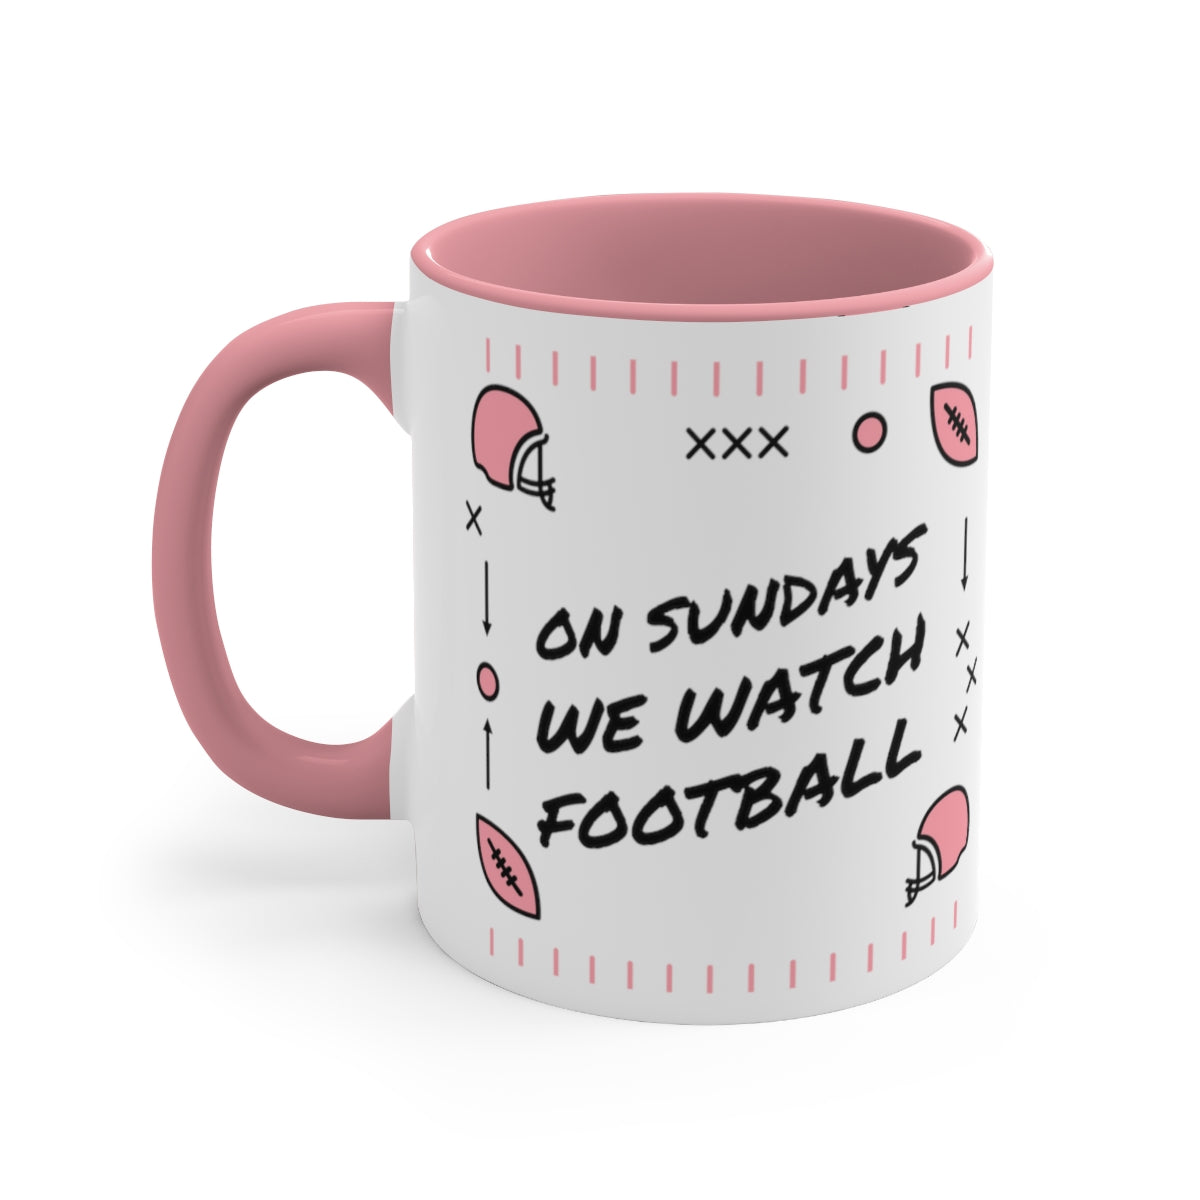 On Sundays We Watch Football Mug